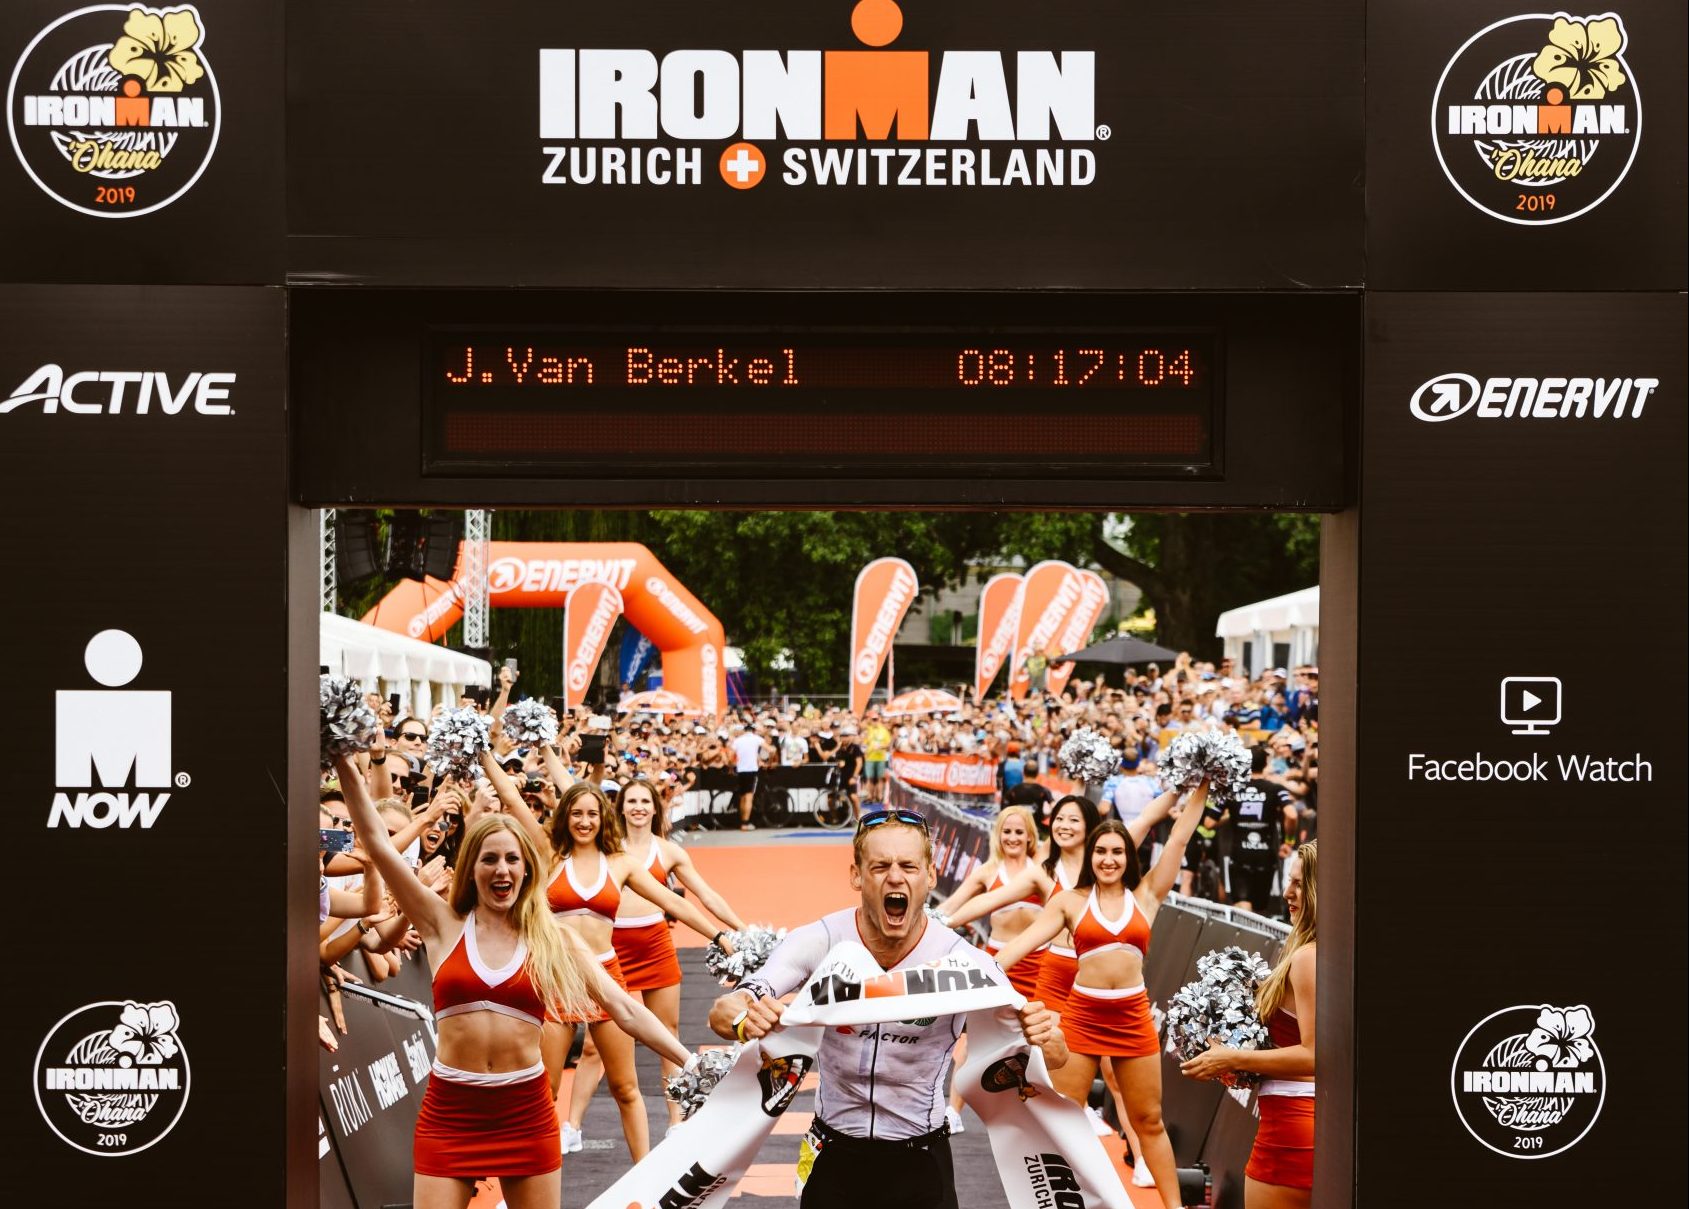 Zieleinlauf Ironman Jan van Berkel